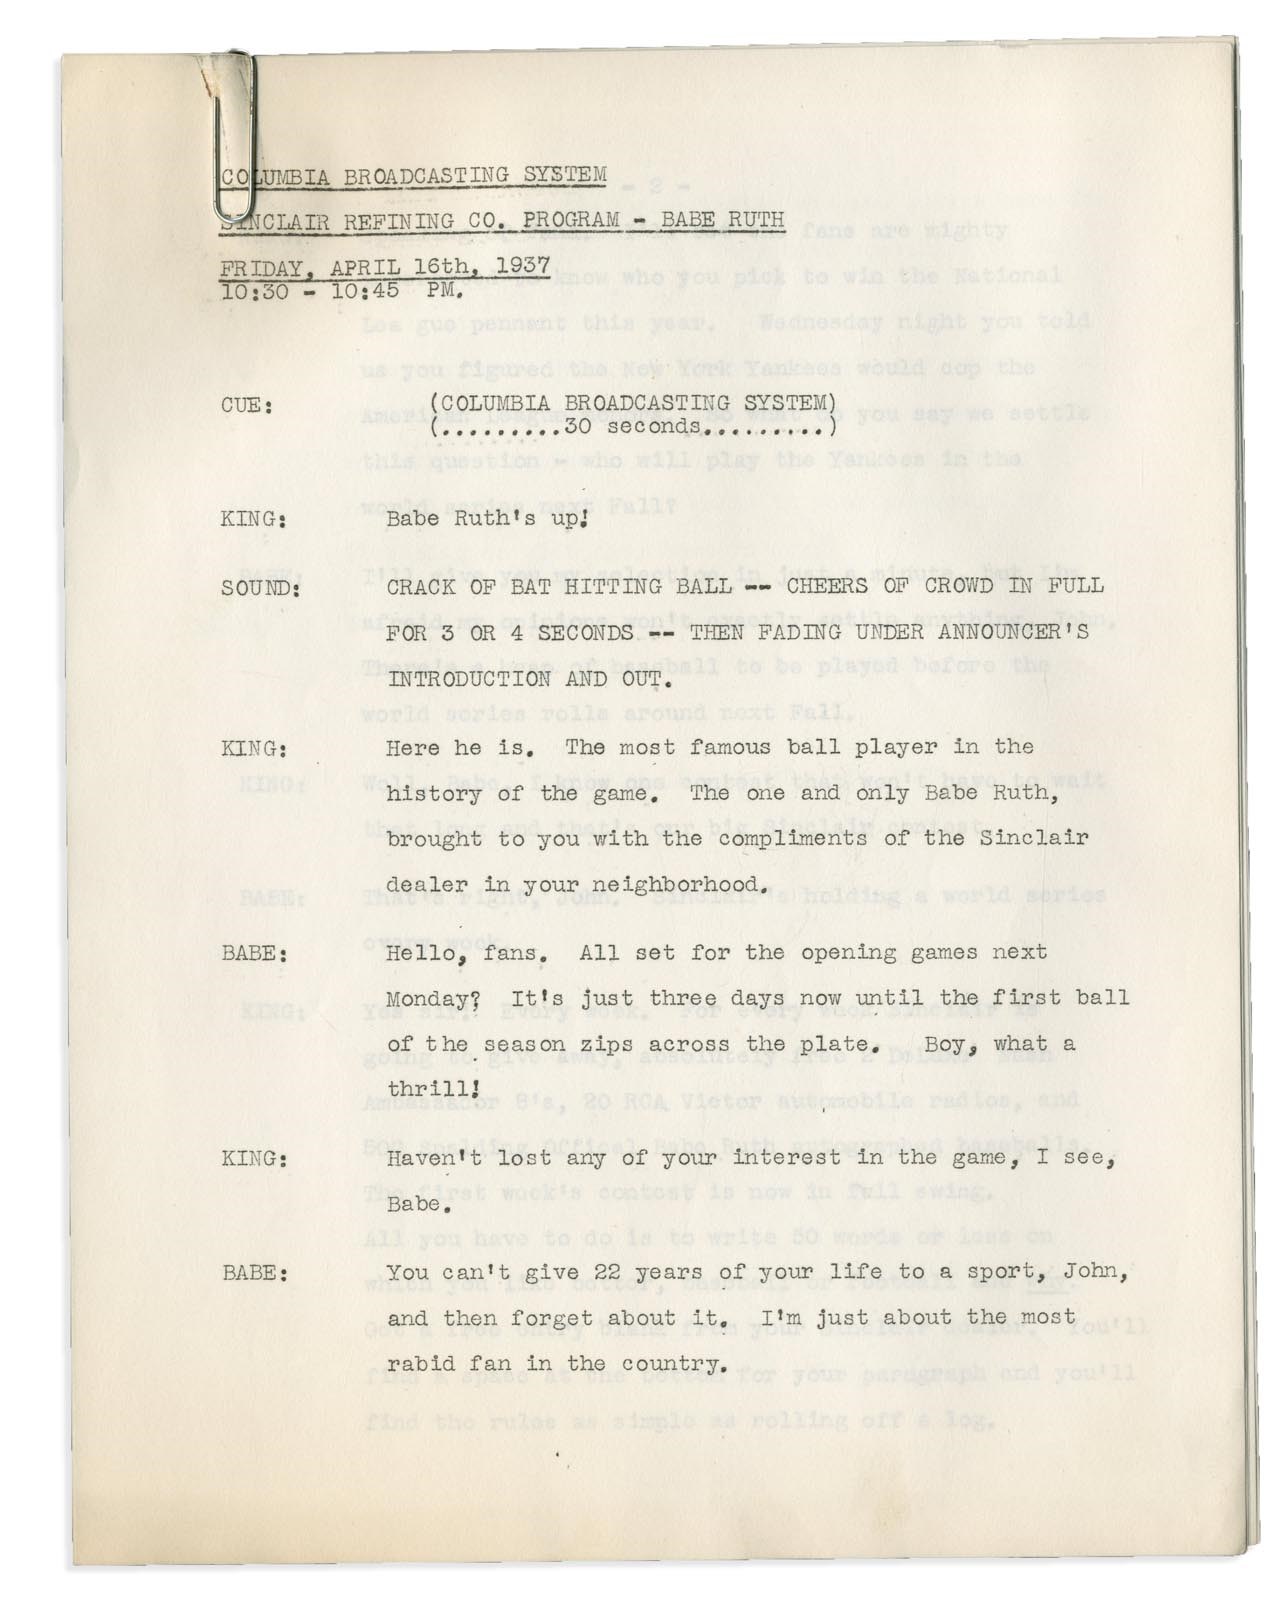 1937 Babe Ruth's Personal Sinclair Oil Radio Scripts